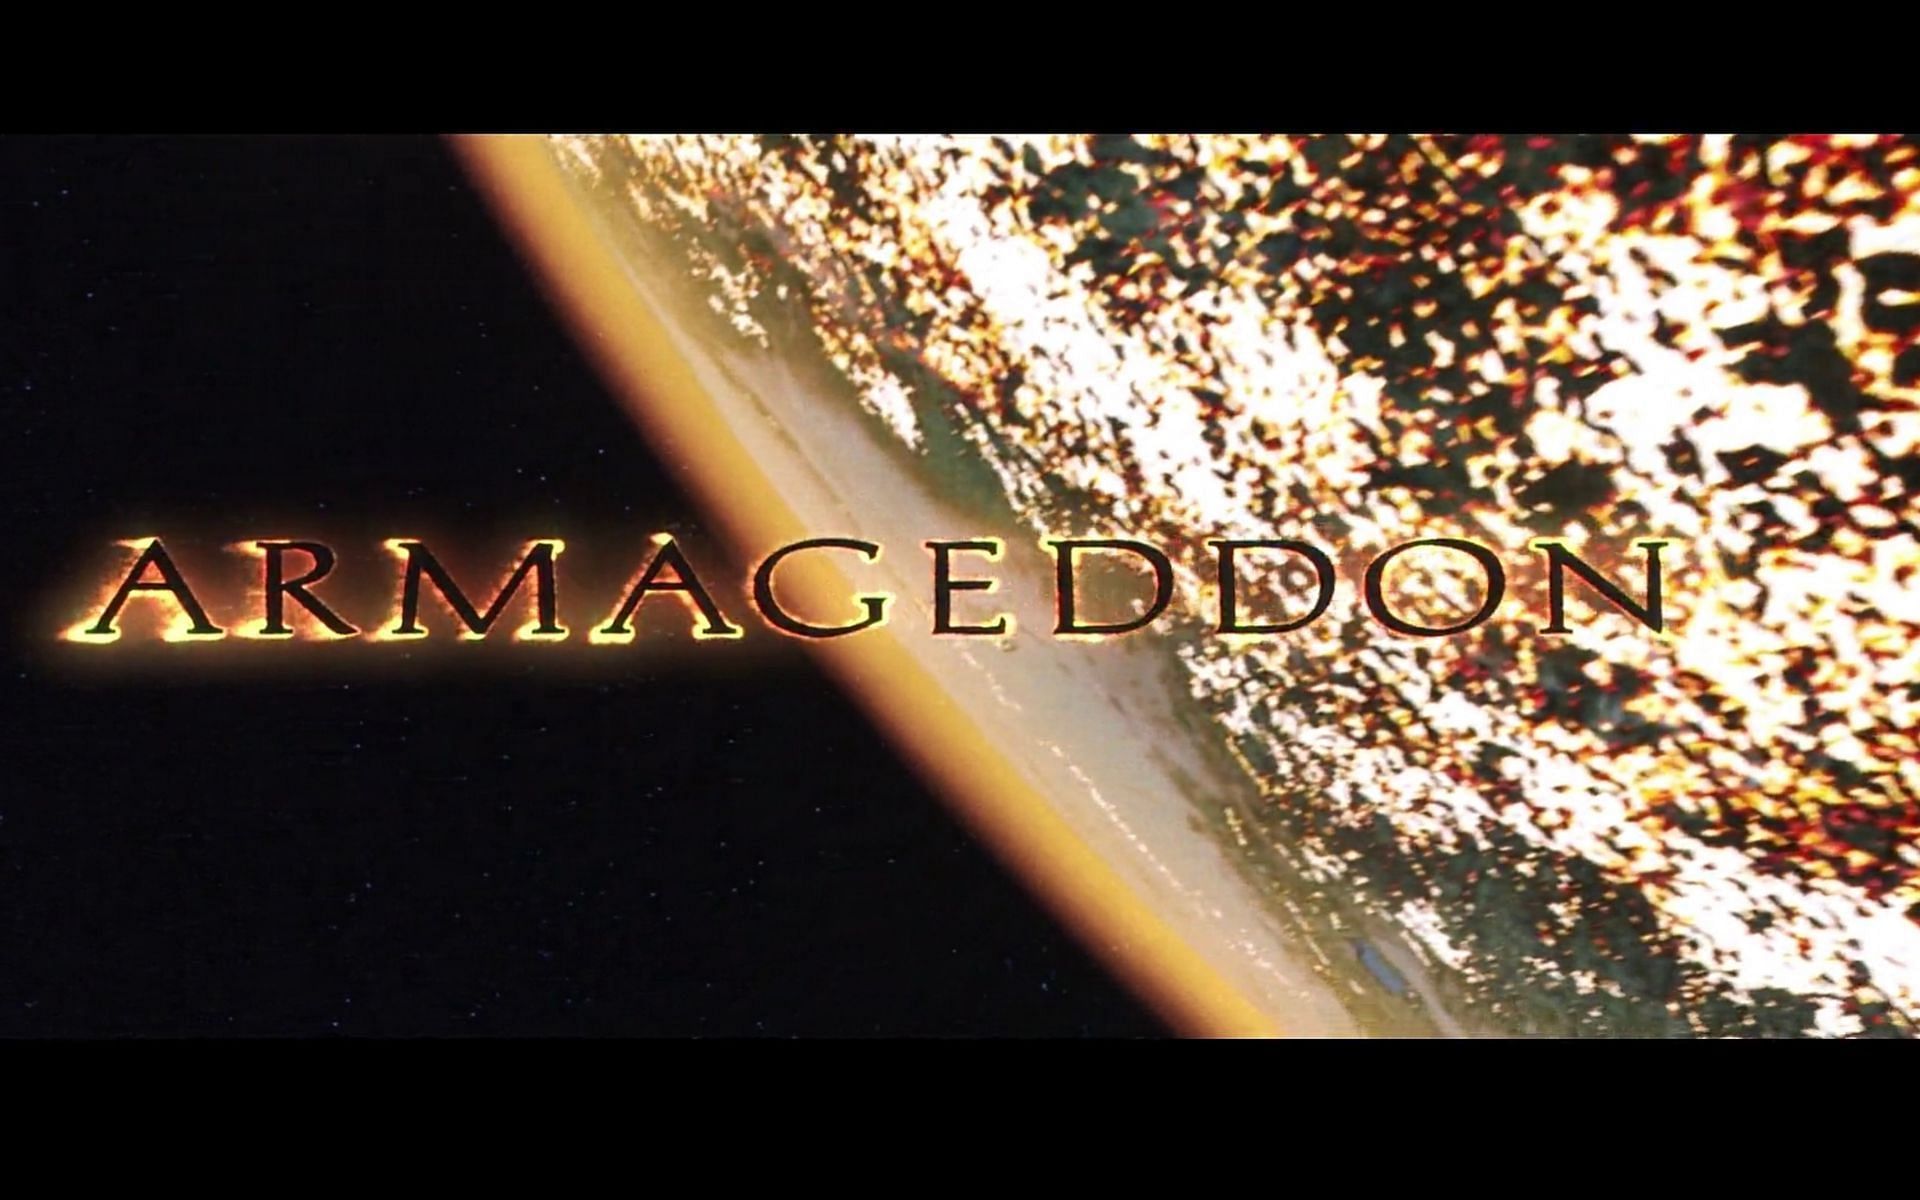 Armageddon 1998 (Image via Disney+hotstar)